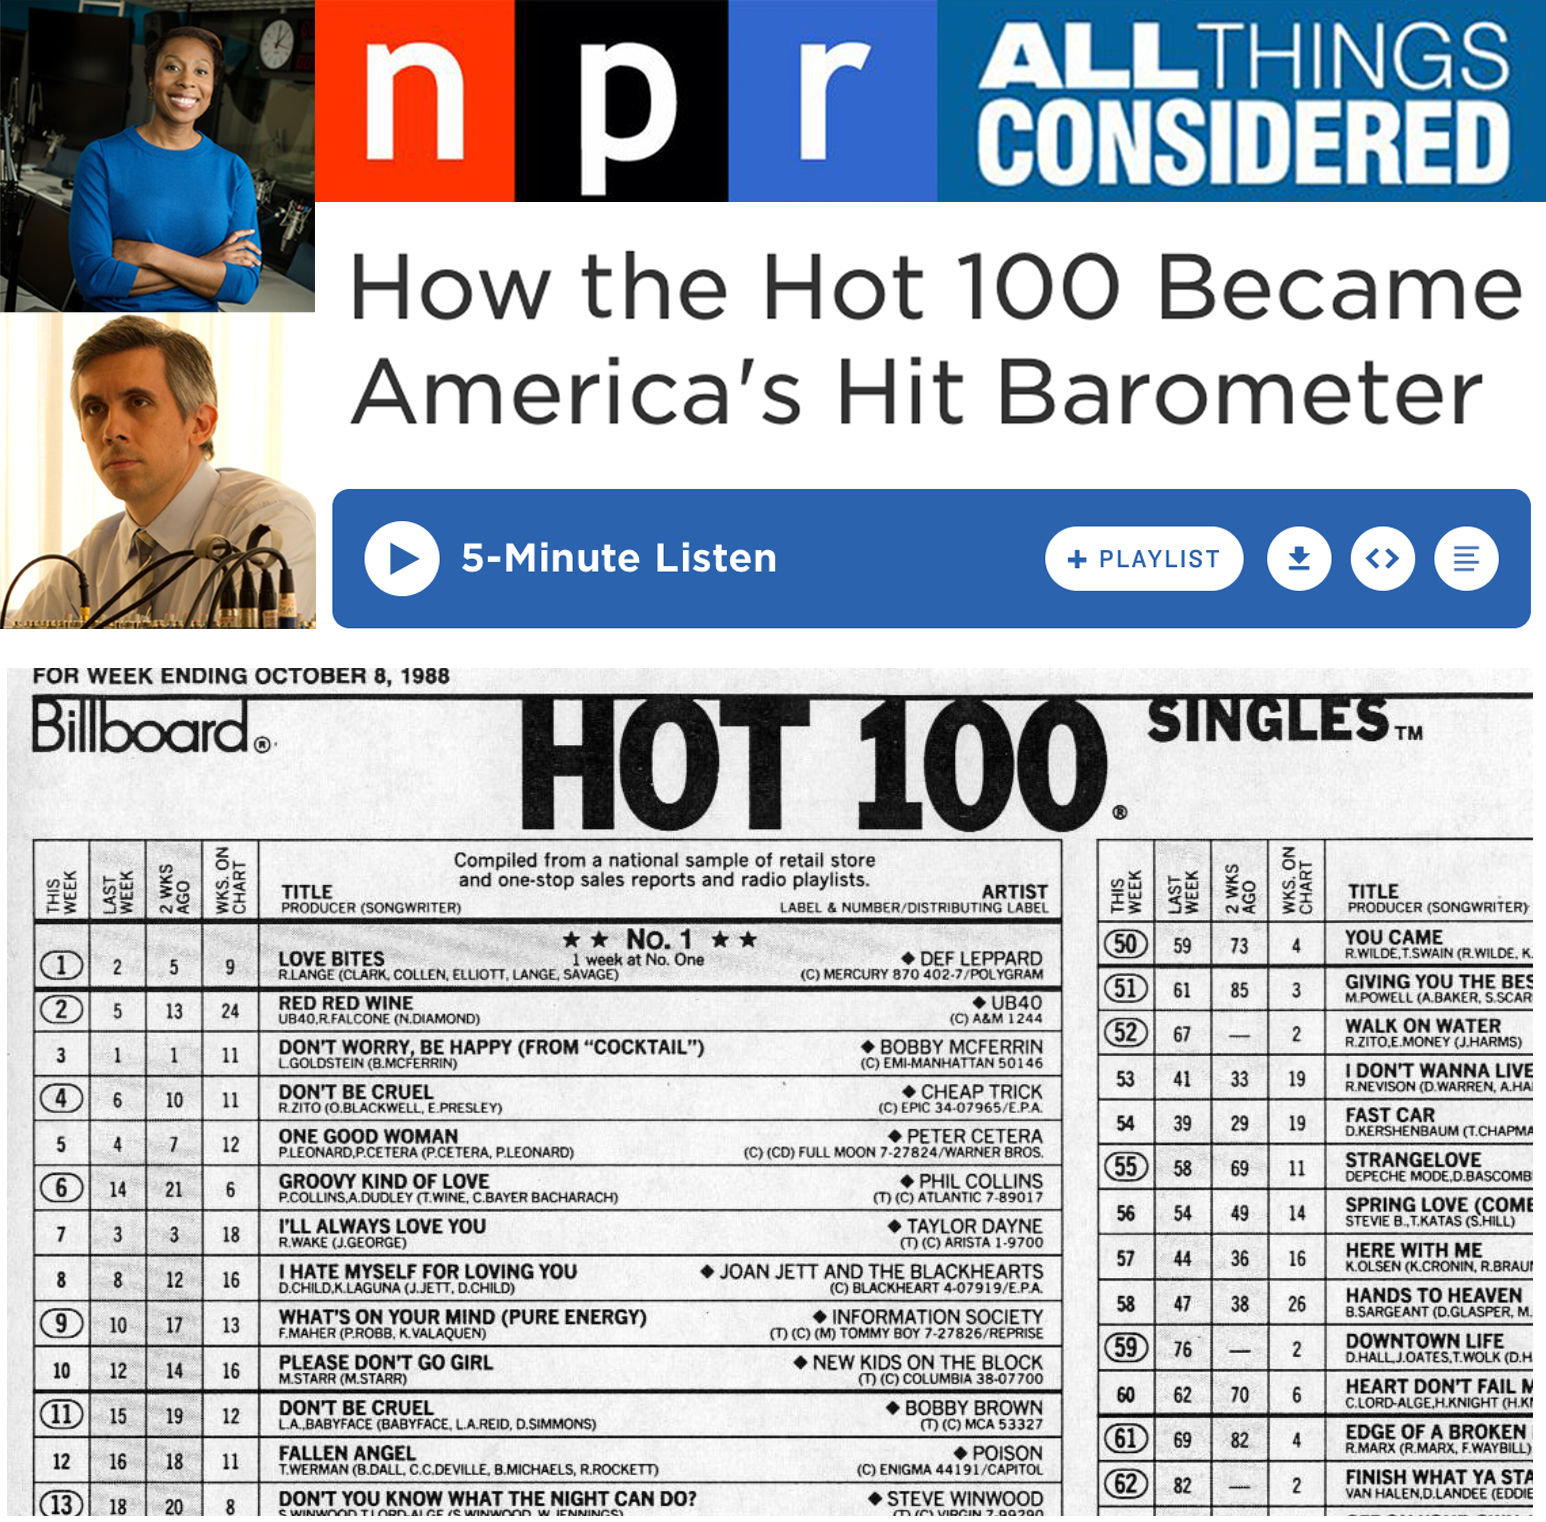 NPR-ATC-Aug2013-CMolanphy-Hot100